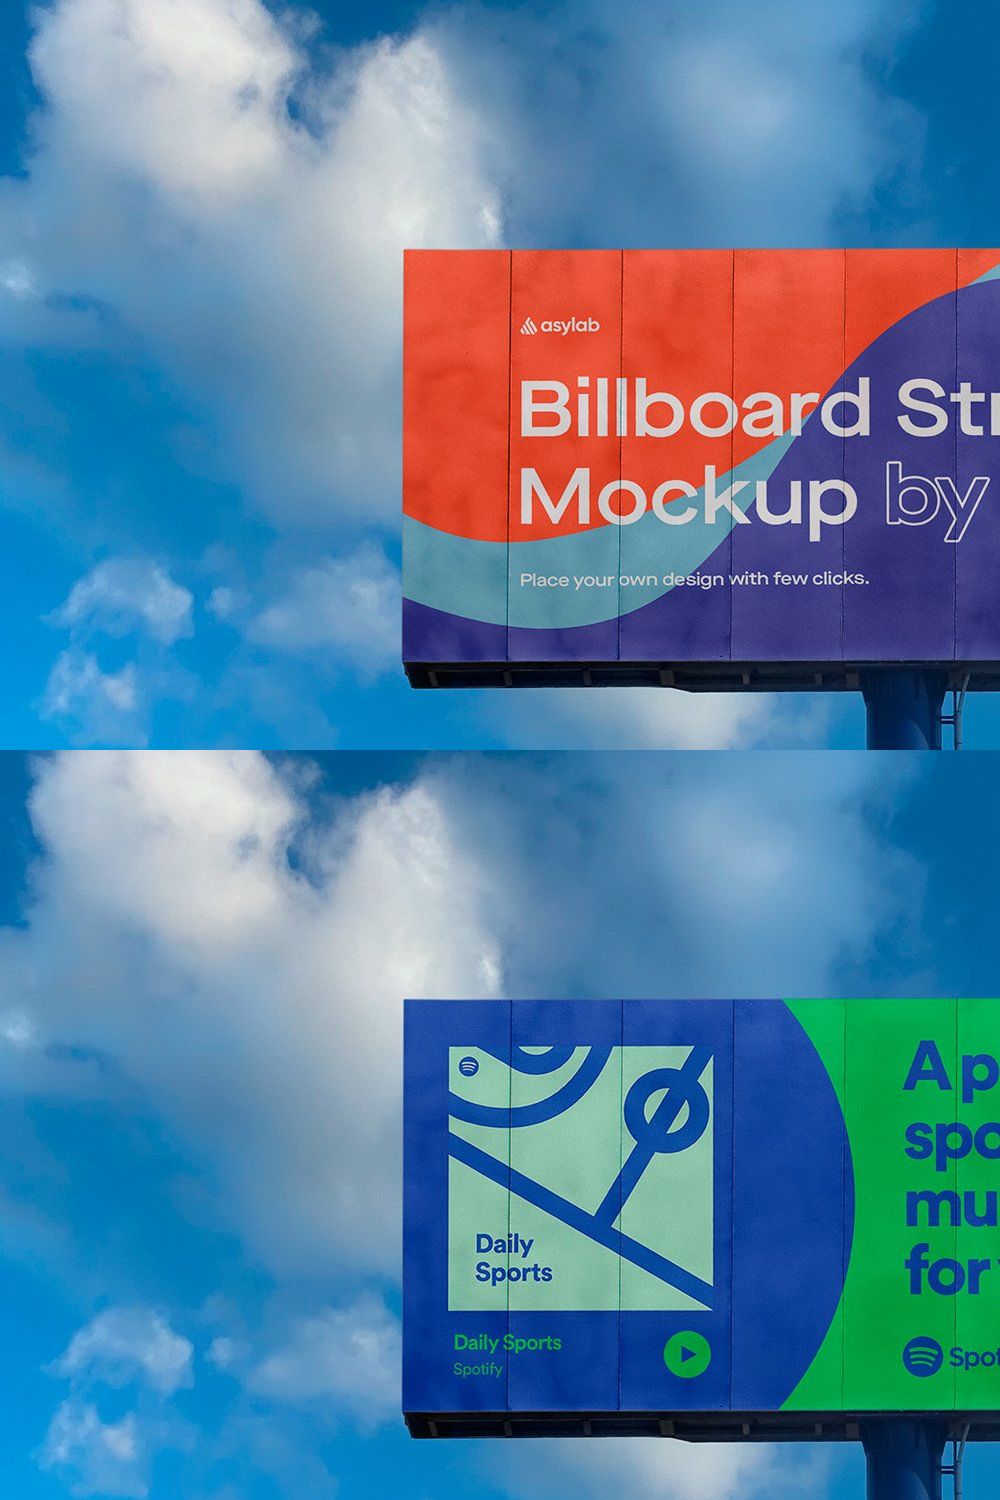 Billboard Urban Street Mockup - PSD pinterest preview image.